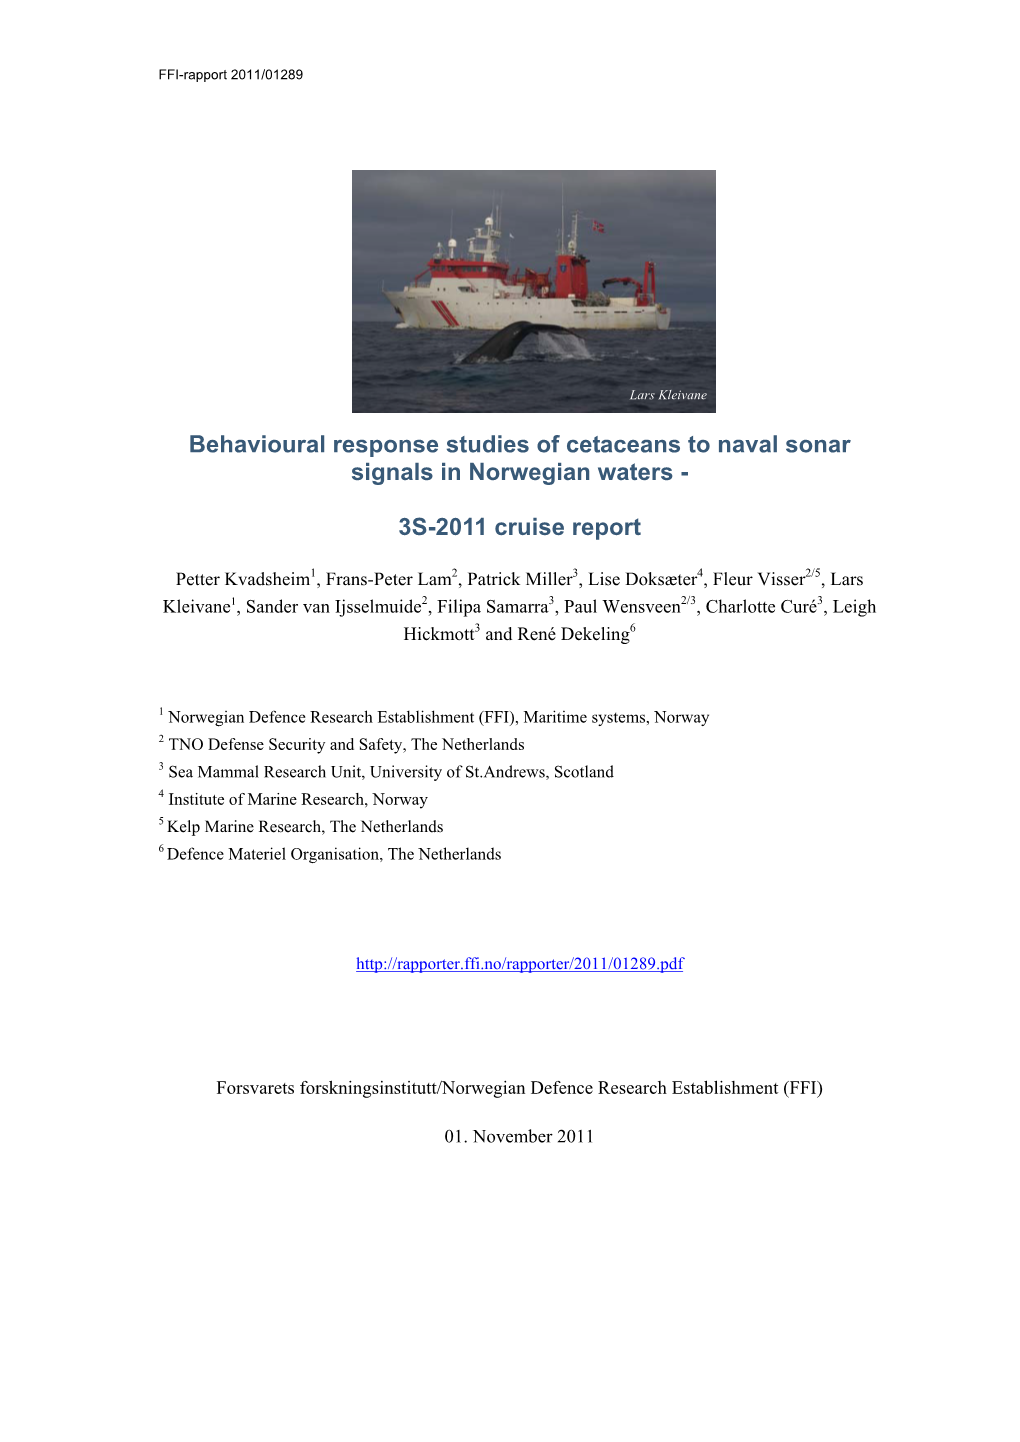 Behavioural Response Studies of Cetaceans to Naval Sonar Signals in Norwegian Waters